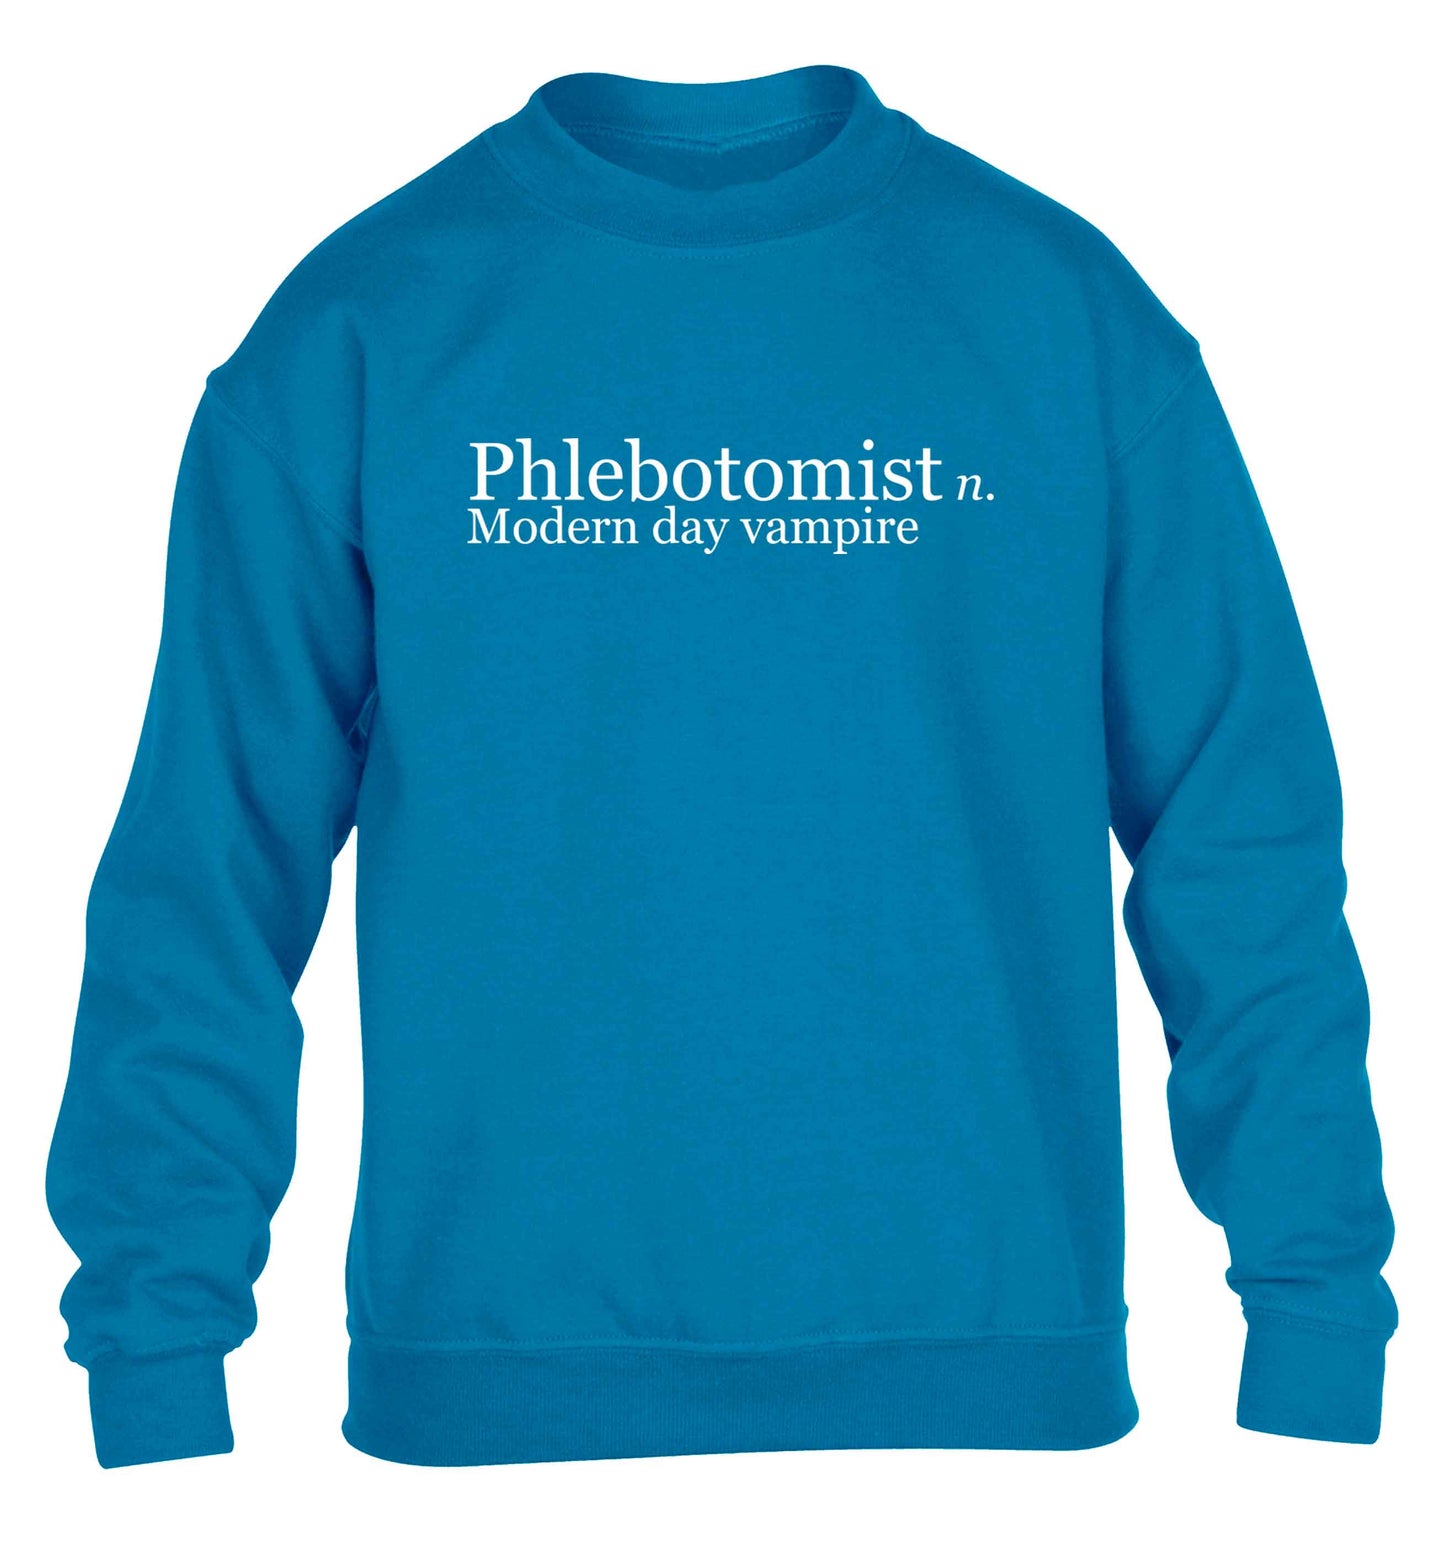 Phlebotomist - Modern day vampire children's blue sweater 12-13 Years